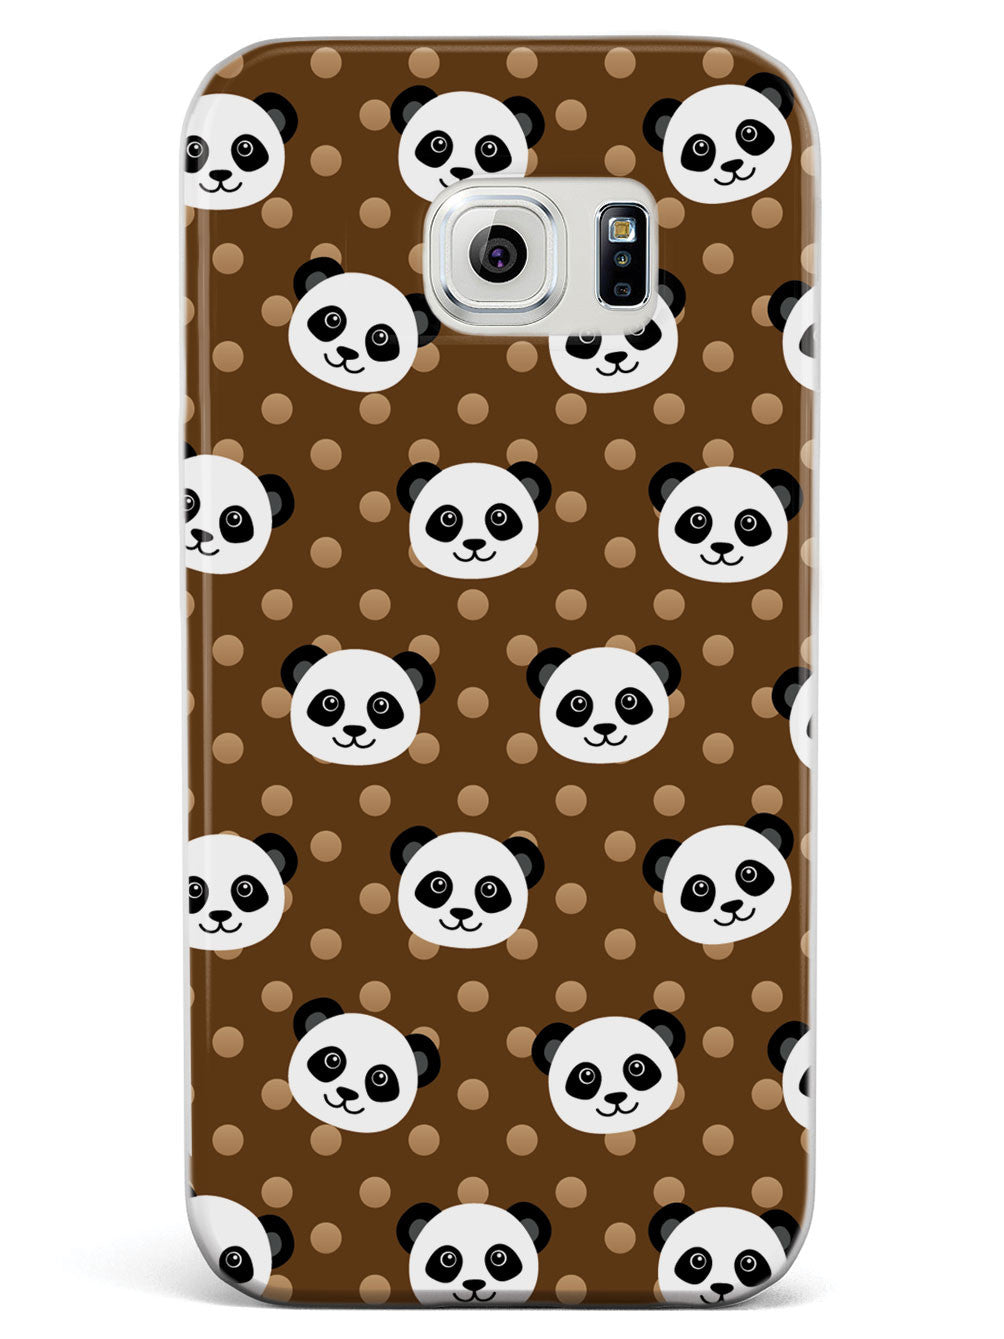 Cute Panda Pattern - Brown Polka Dots Case